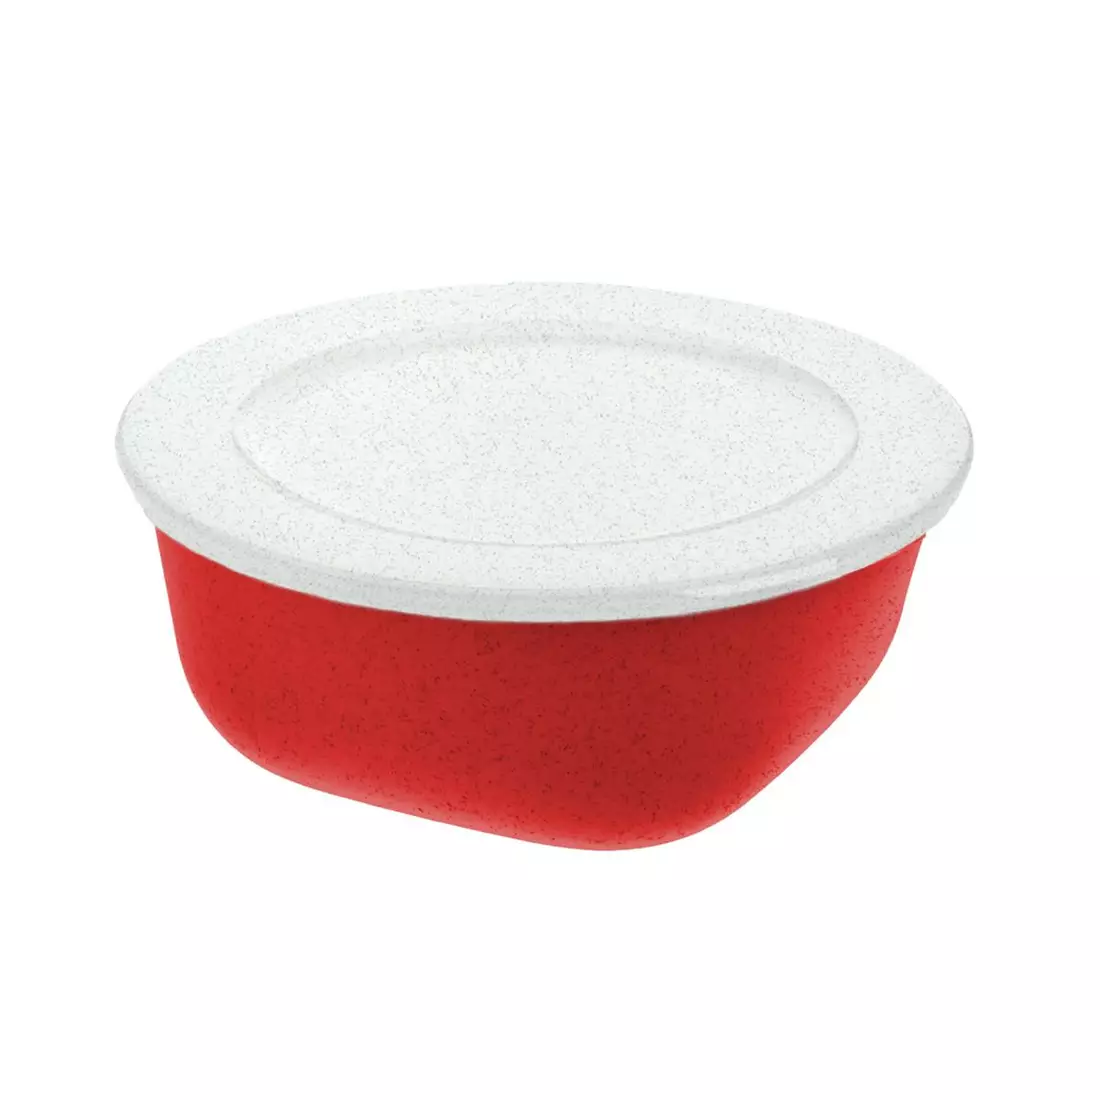 Koziol CONNECT BOX bowl 0,7L, organic red/white